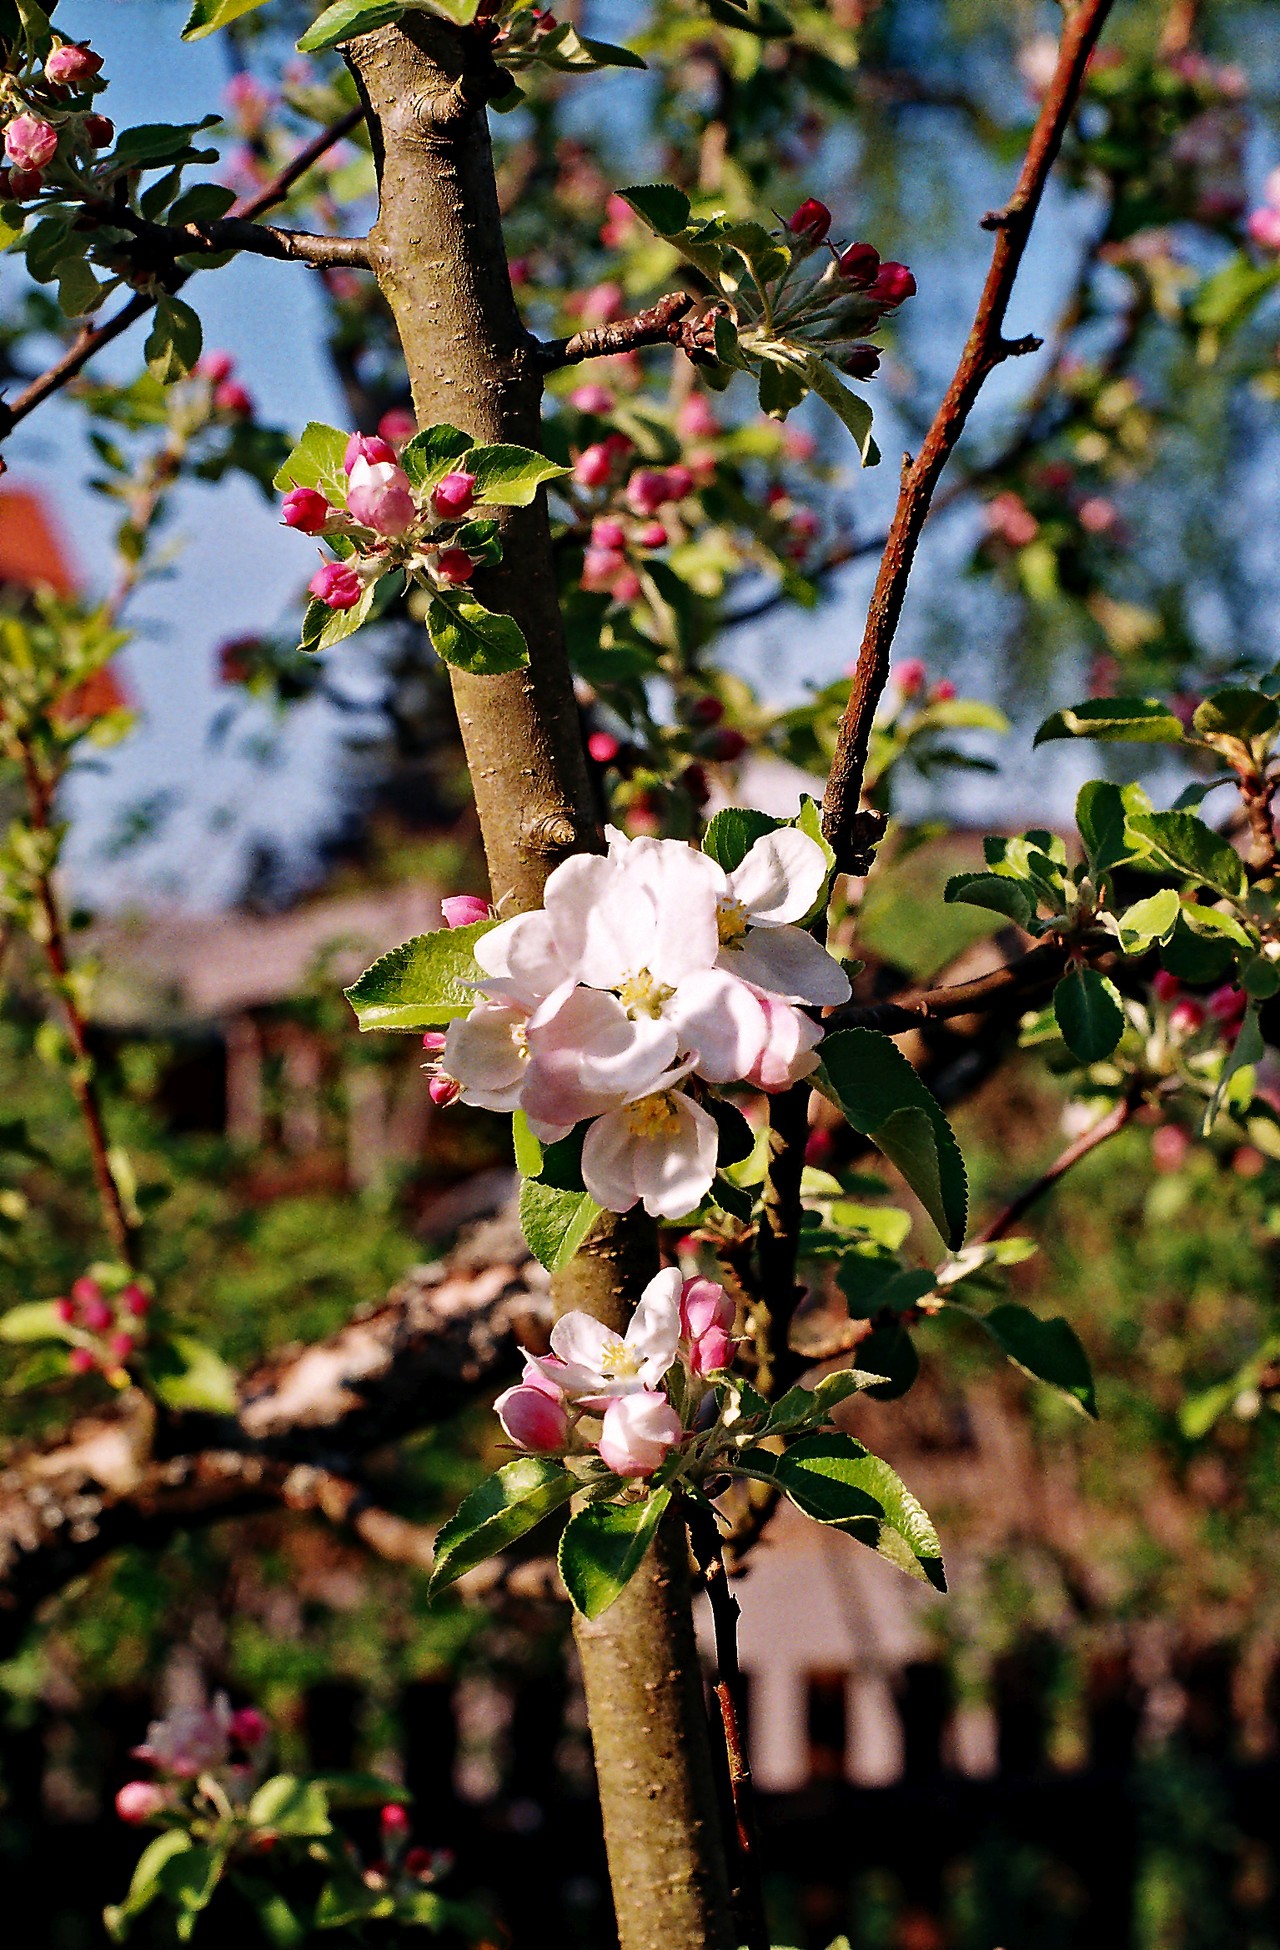 Apfelbaumblüte